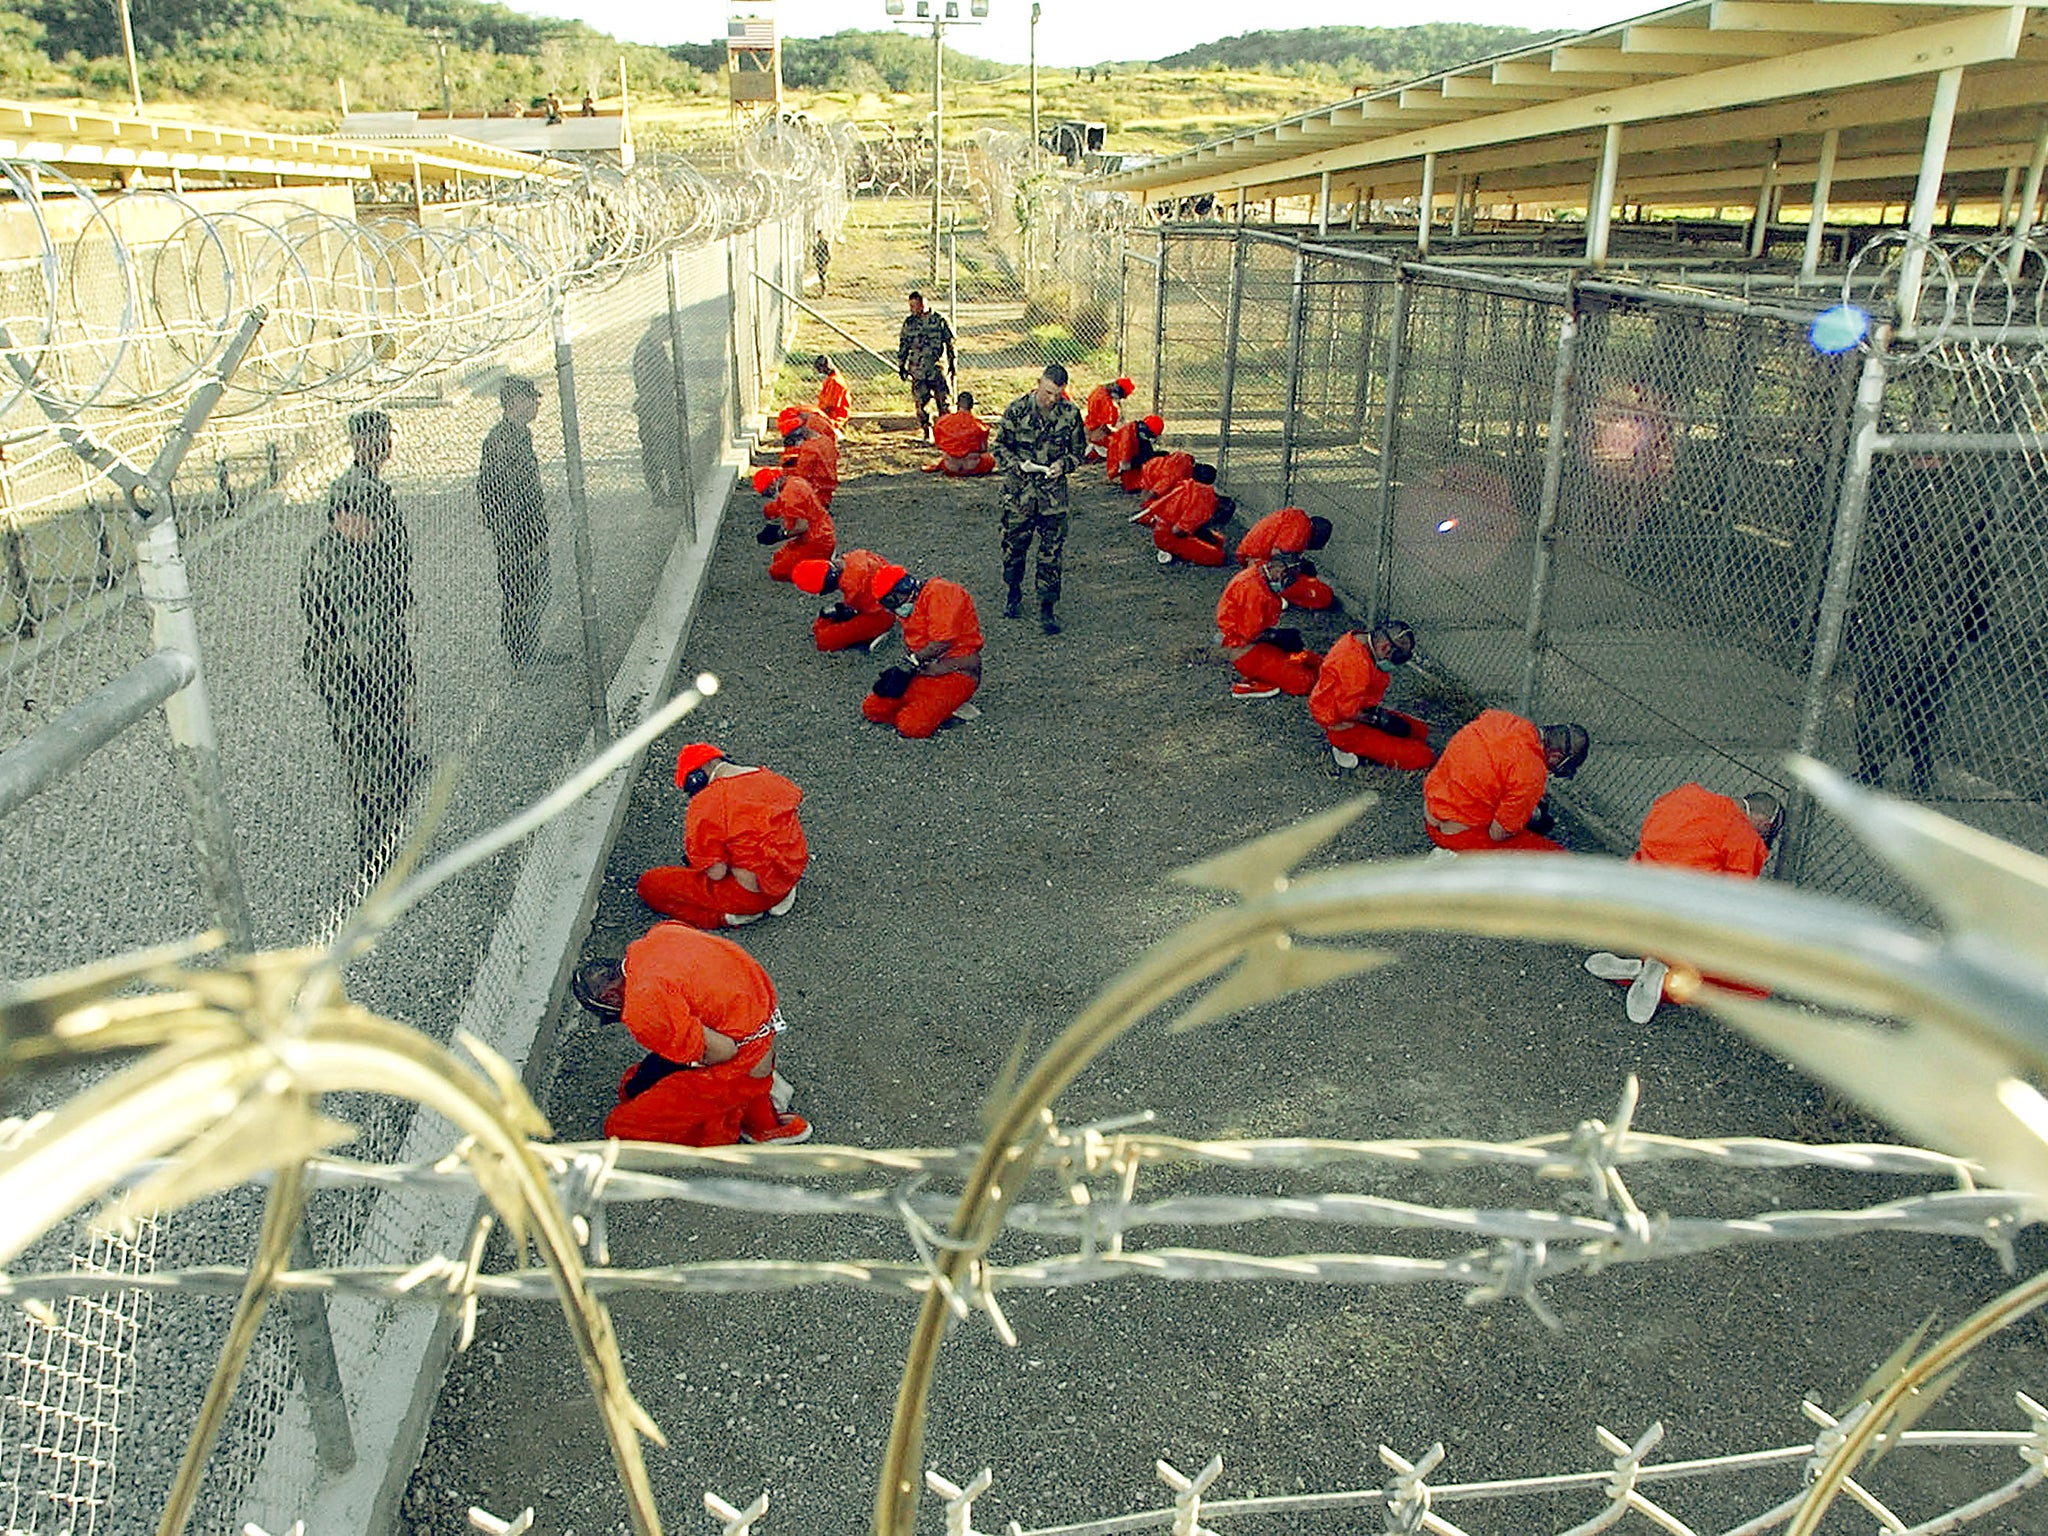 X-Ray vision: Islamist terror suspects in Guantanamo Bay prison in 2002